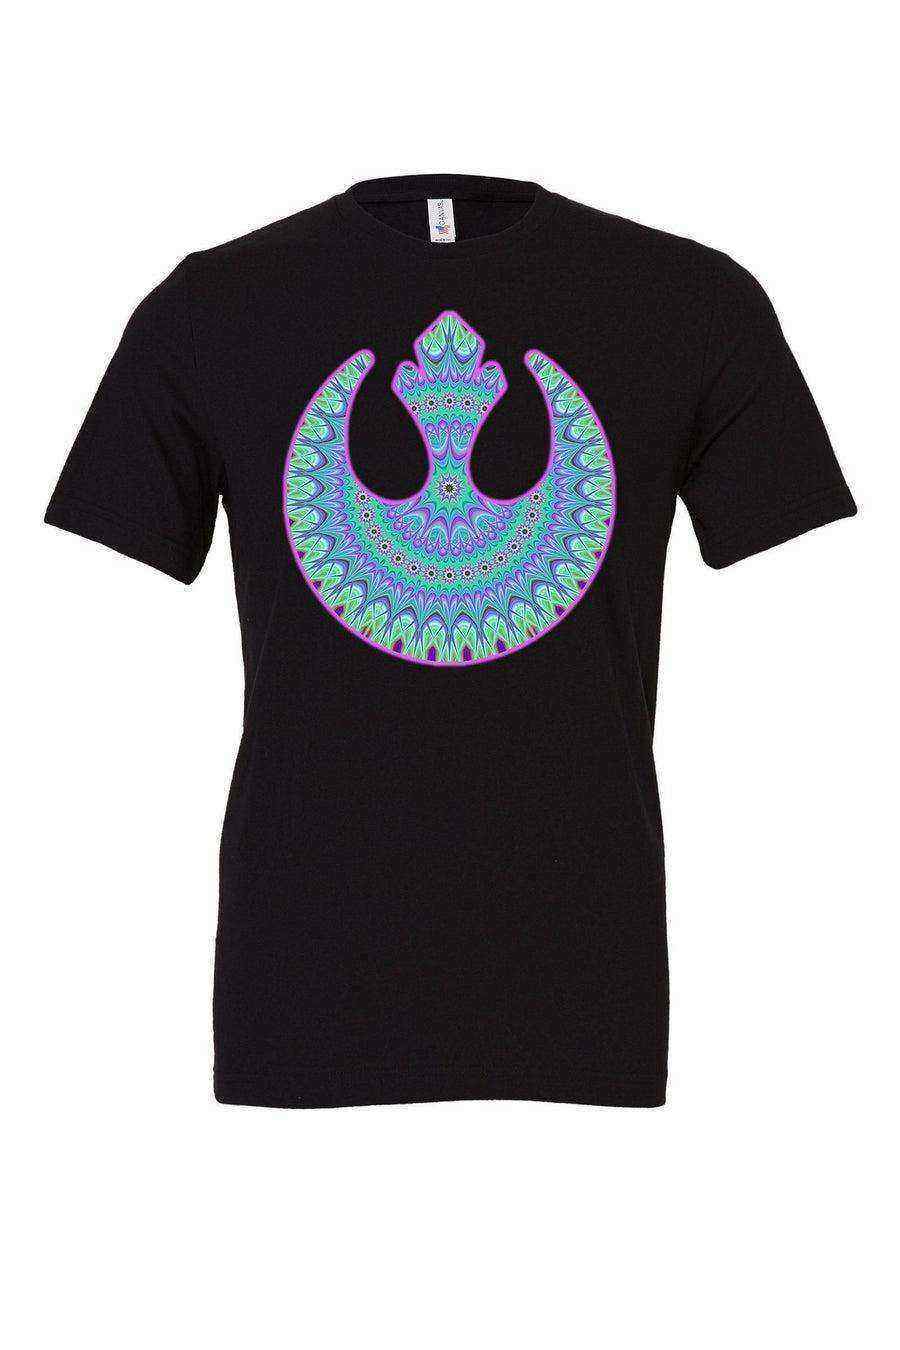 Psychedelic Star Wars Shirt | Retro Shirts - Dylan's Tees